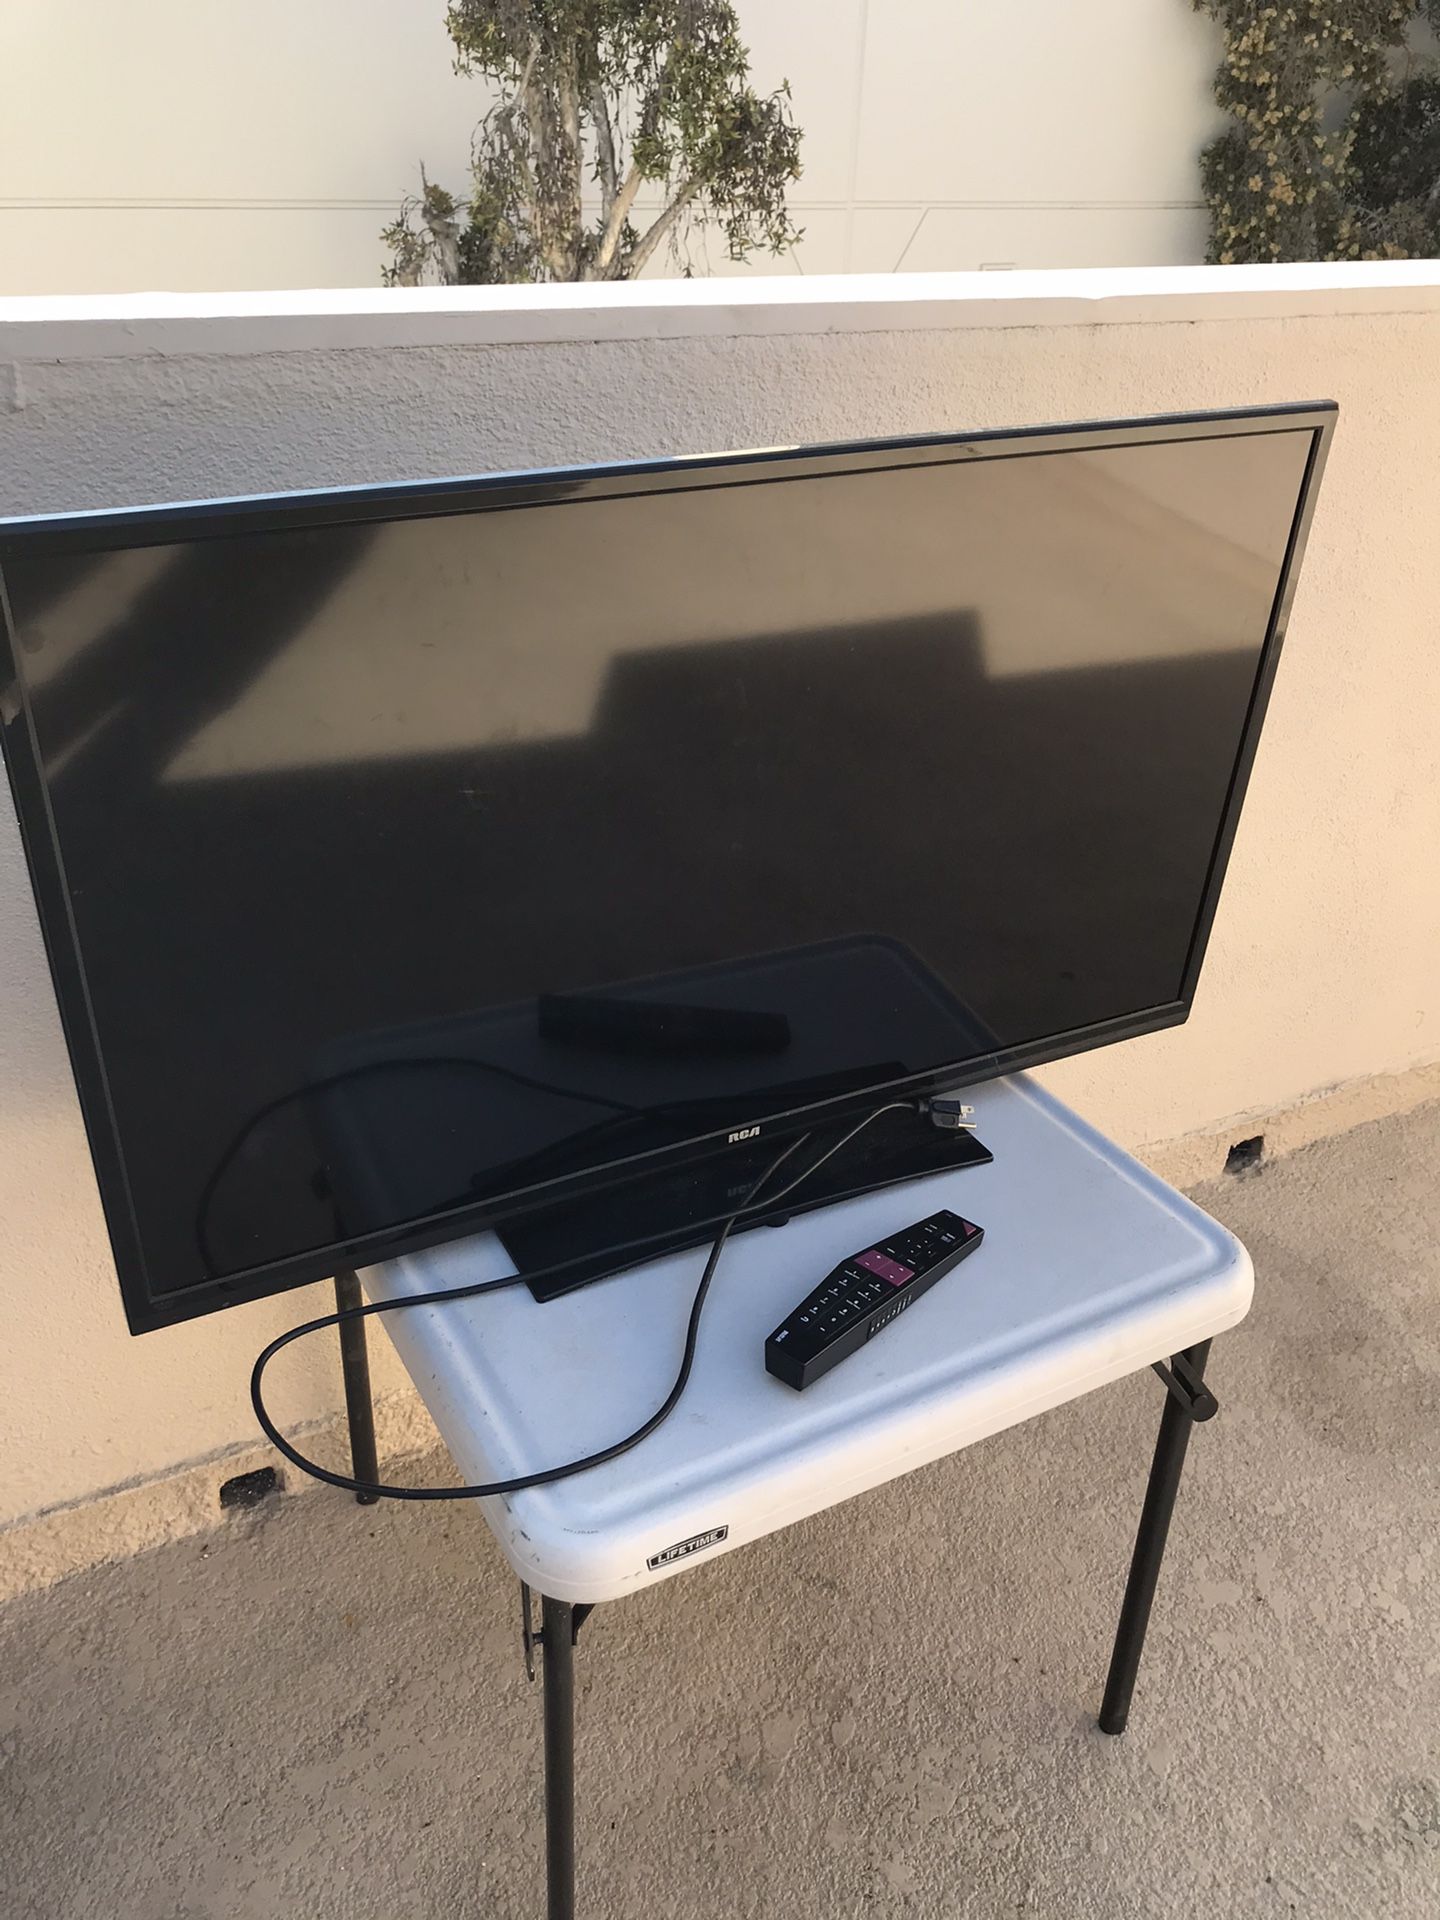 40 inch RCA flat screen TV